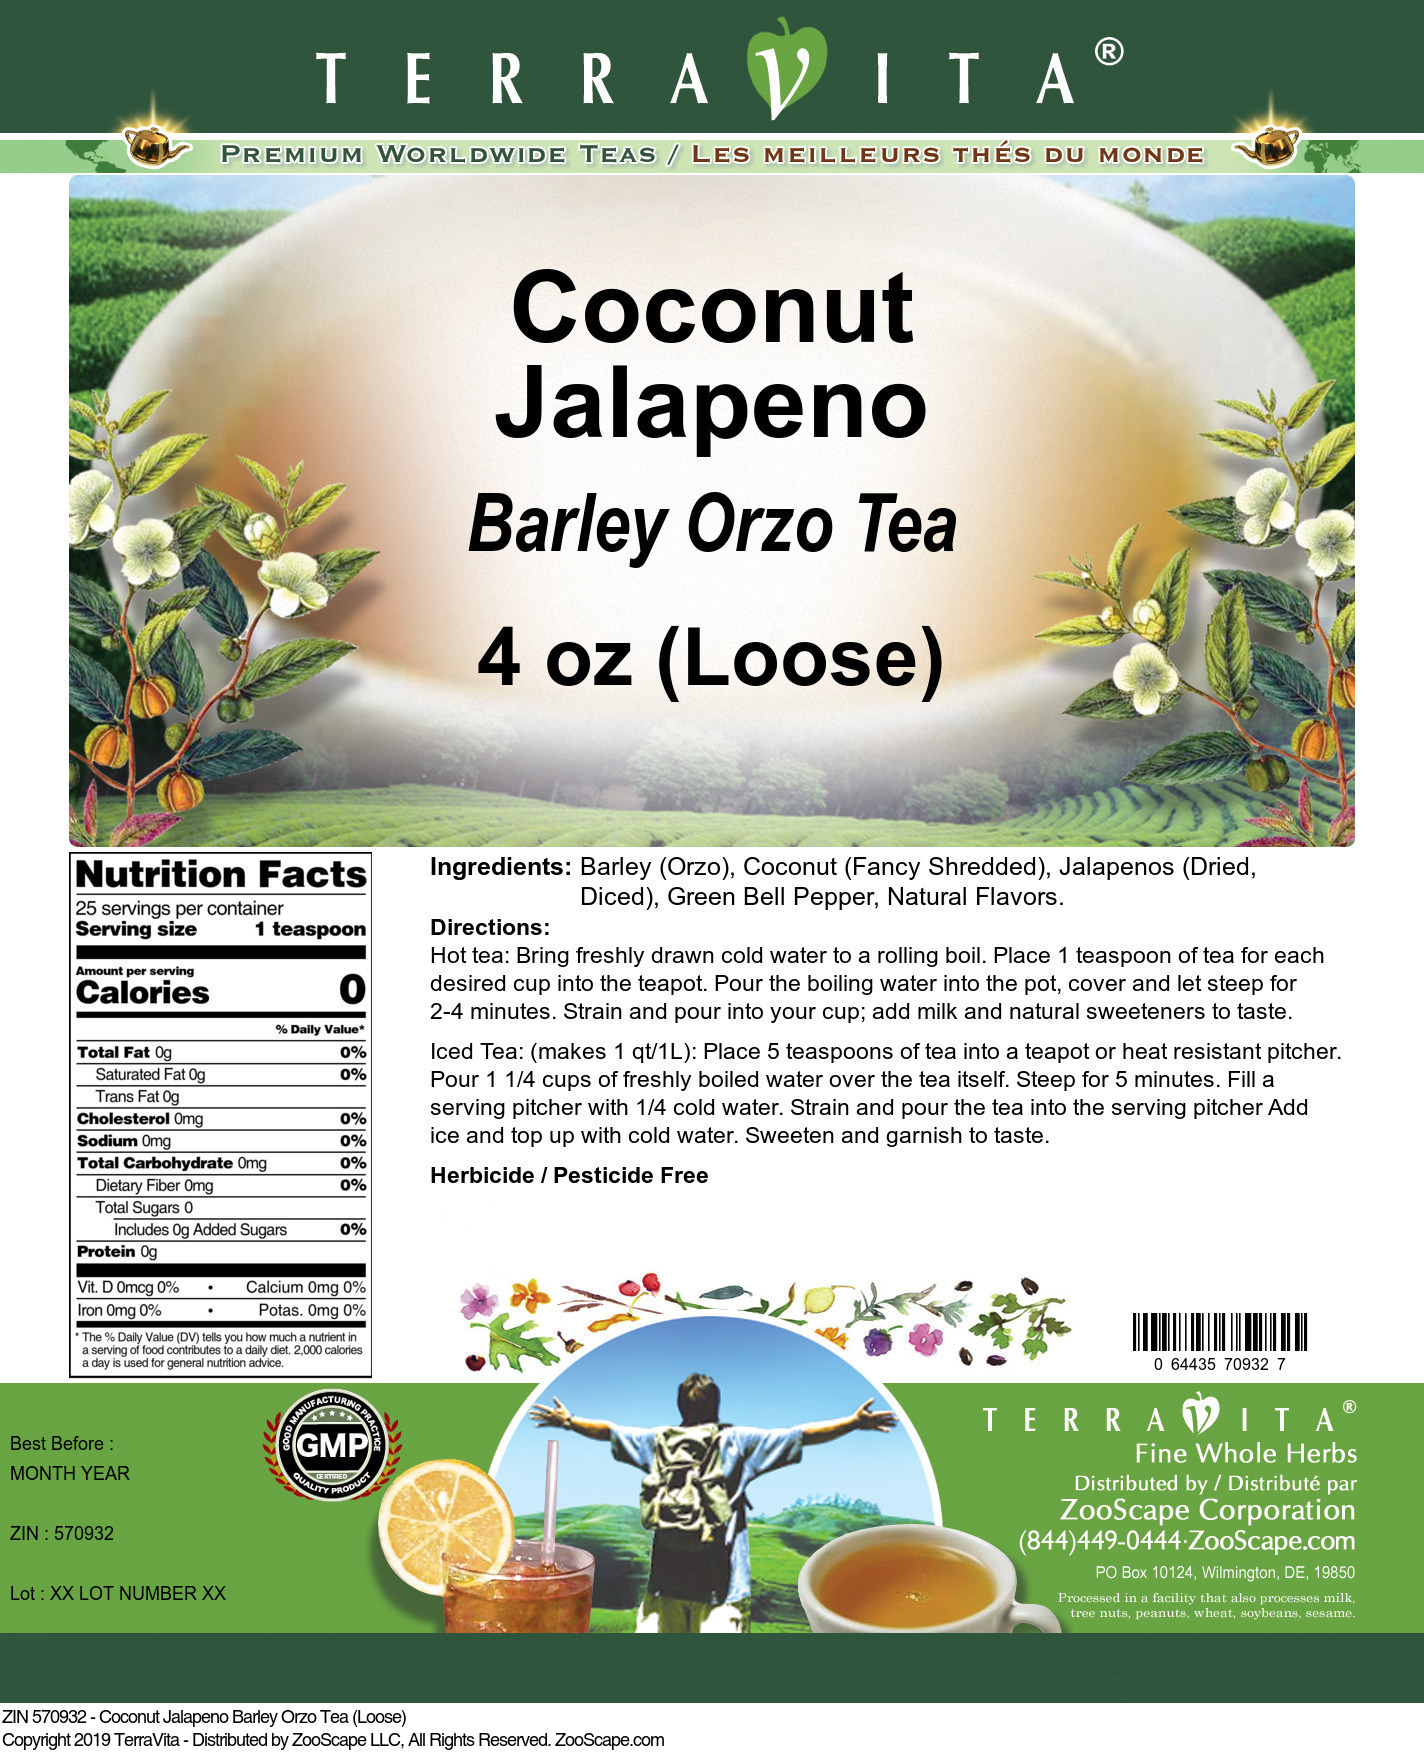 Coconut Jalapeno Barley Orzo Tea (Loose) - Label